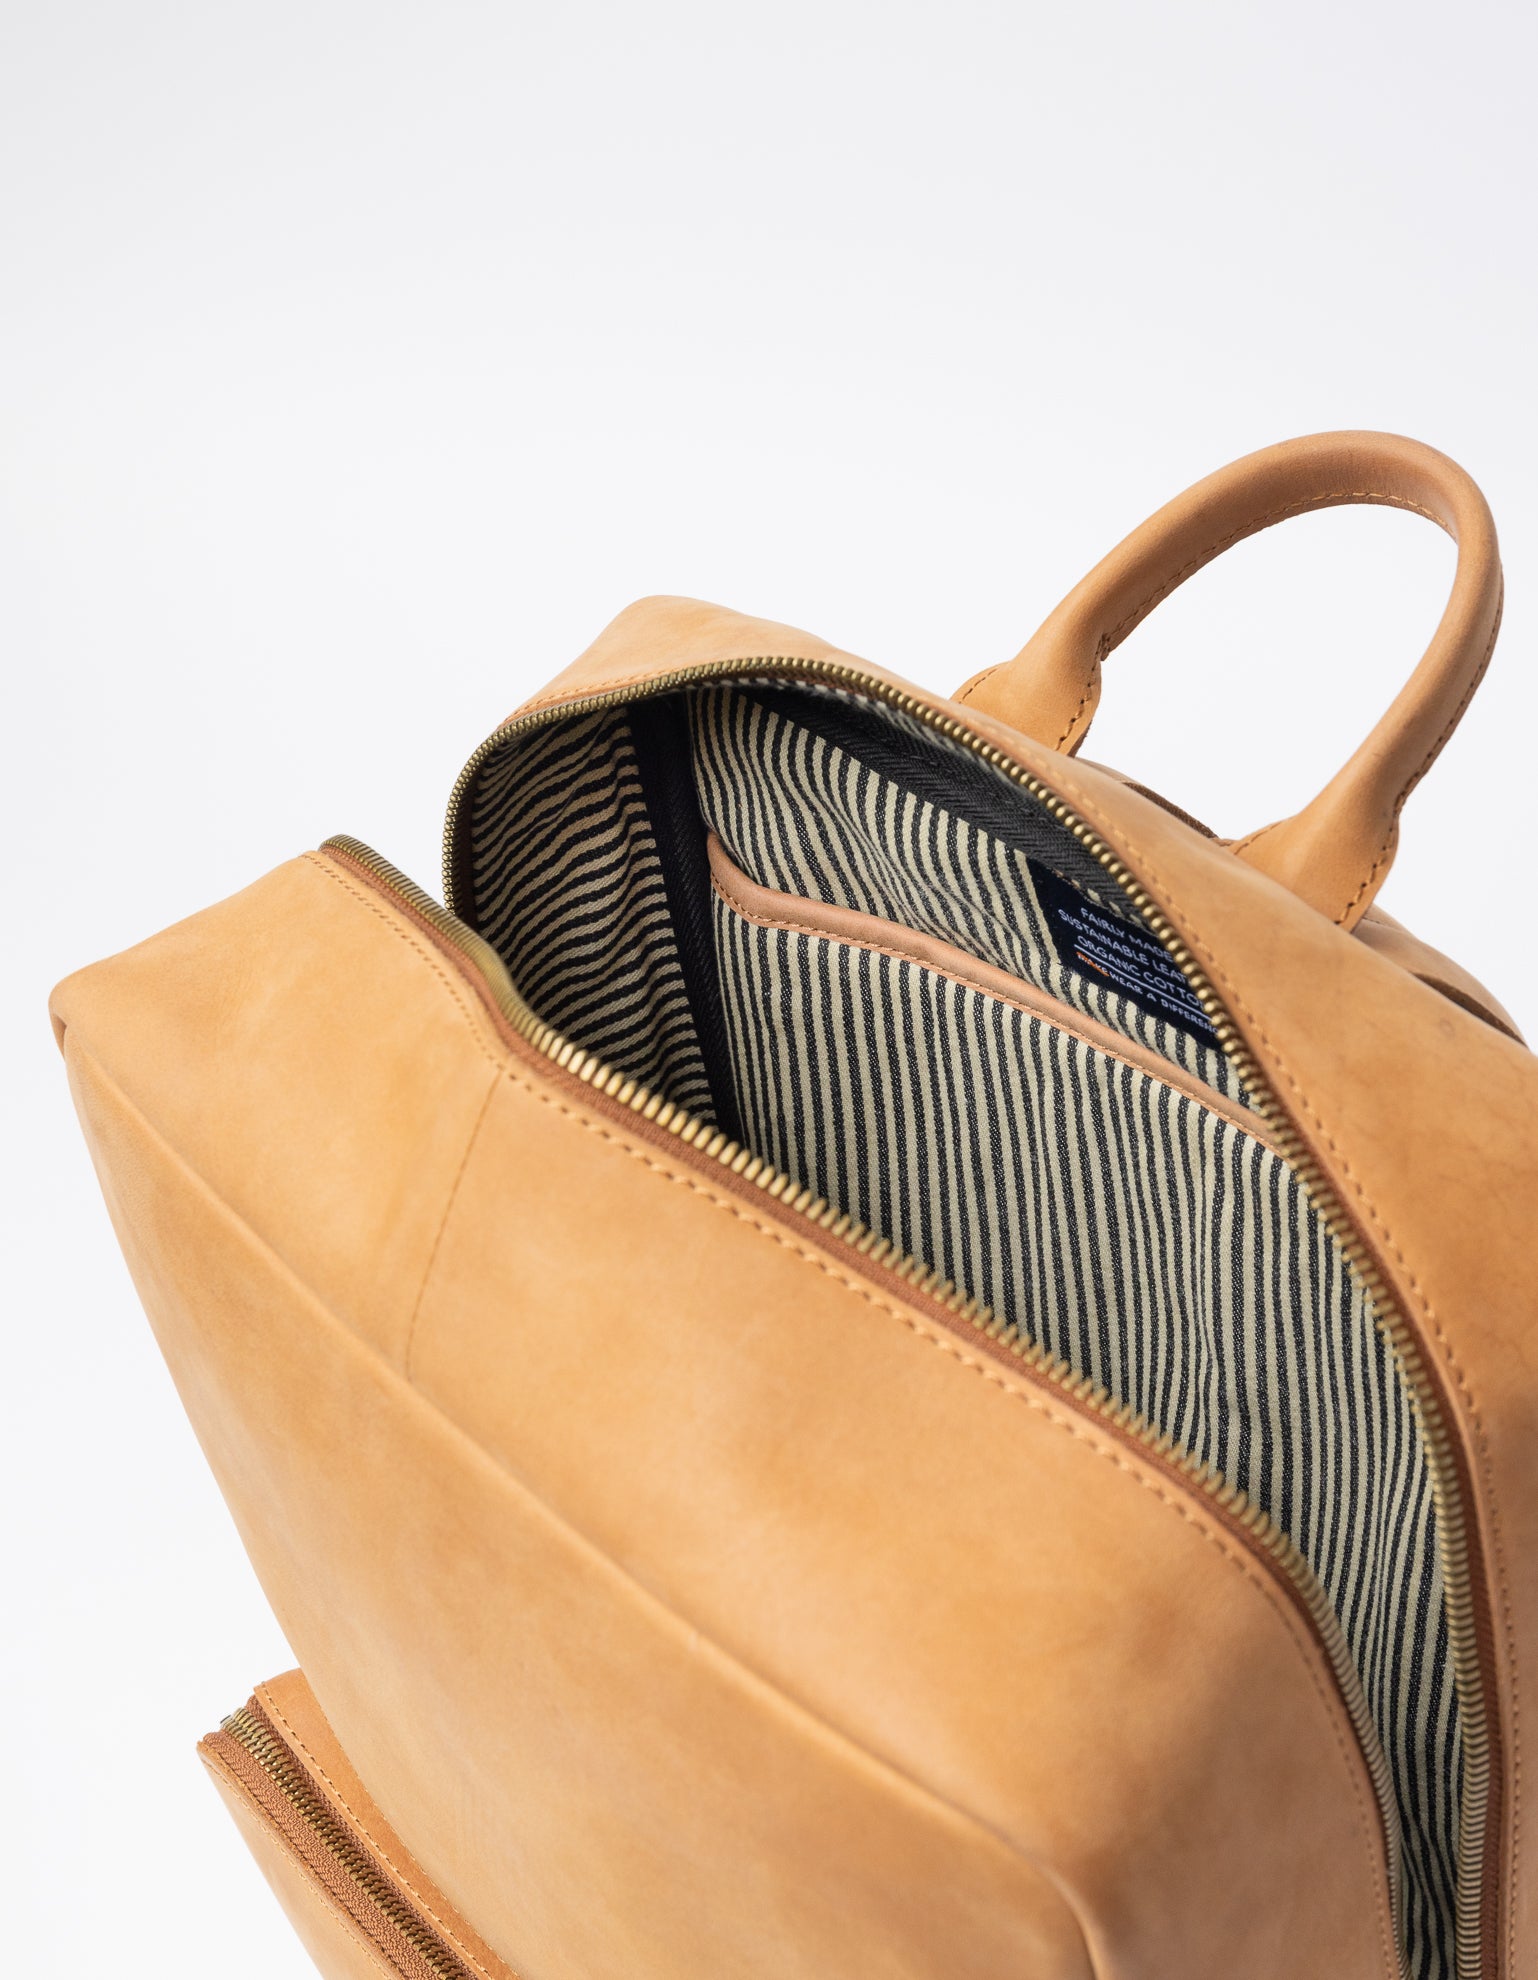 Camel Leather backpack. Inside product image.